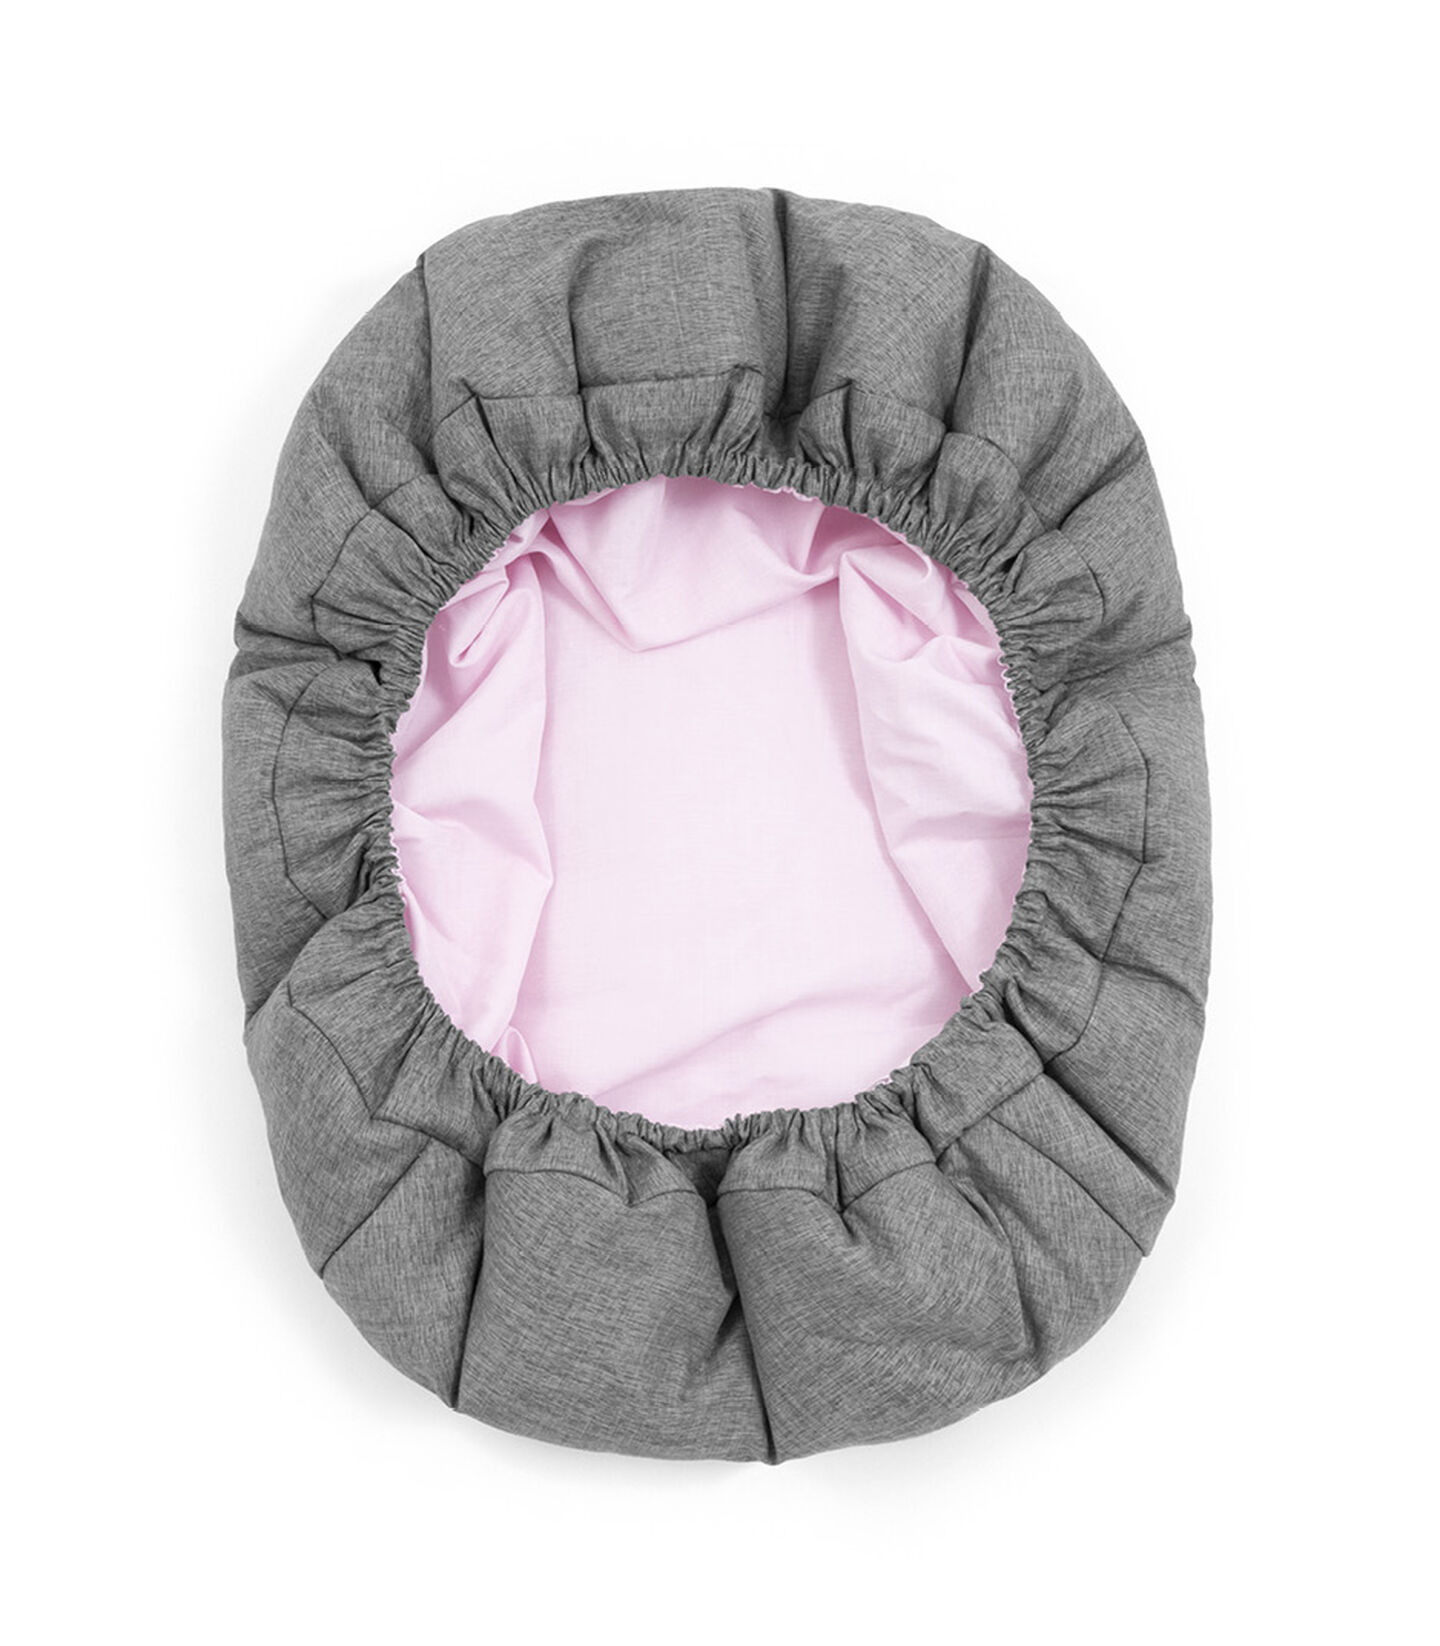 Stokke® Nomi® Newborn Set Black / Grey Pink, Black Grey pink, mainview view 9